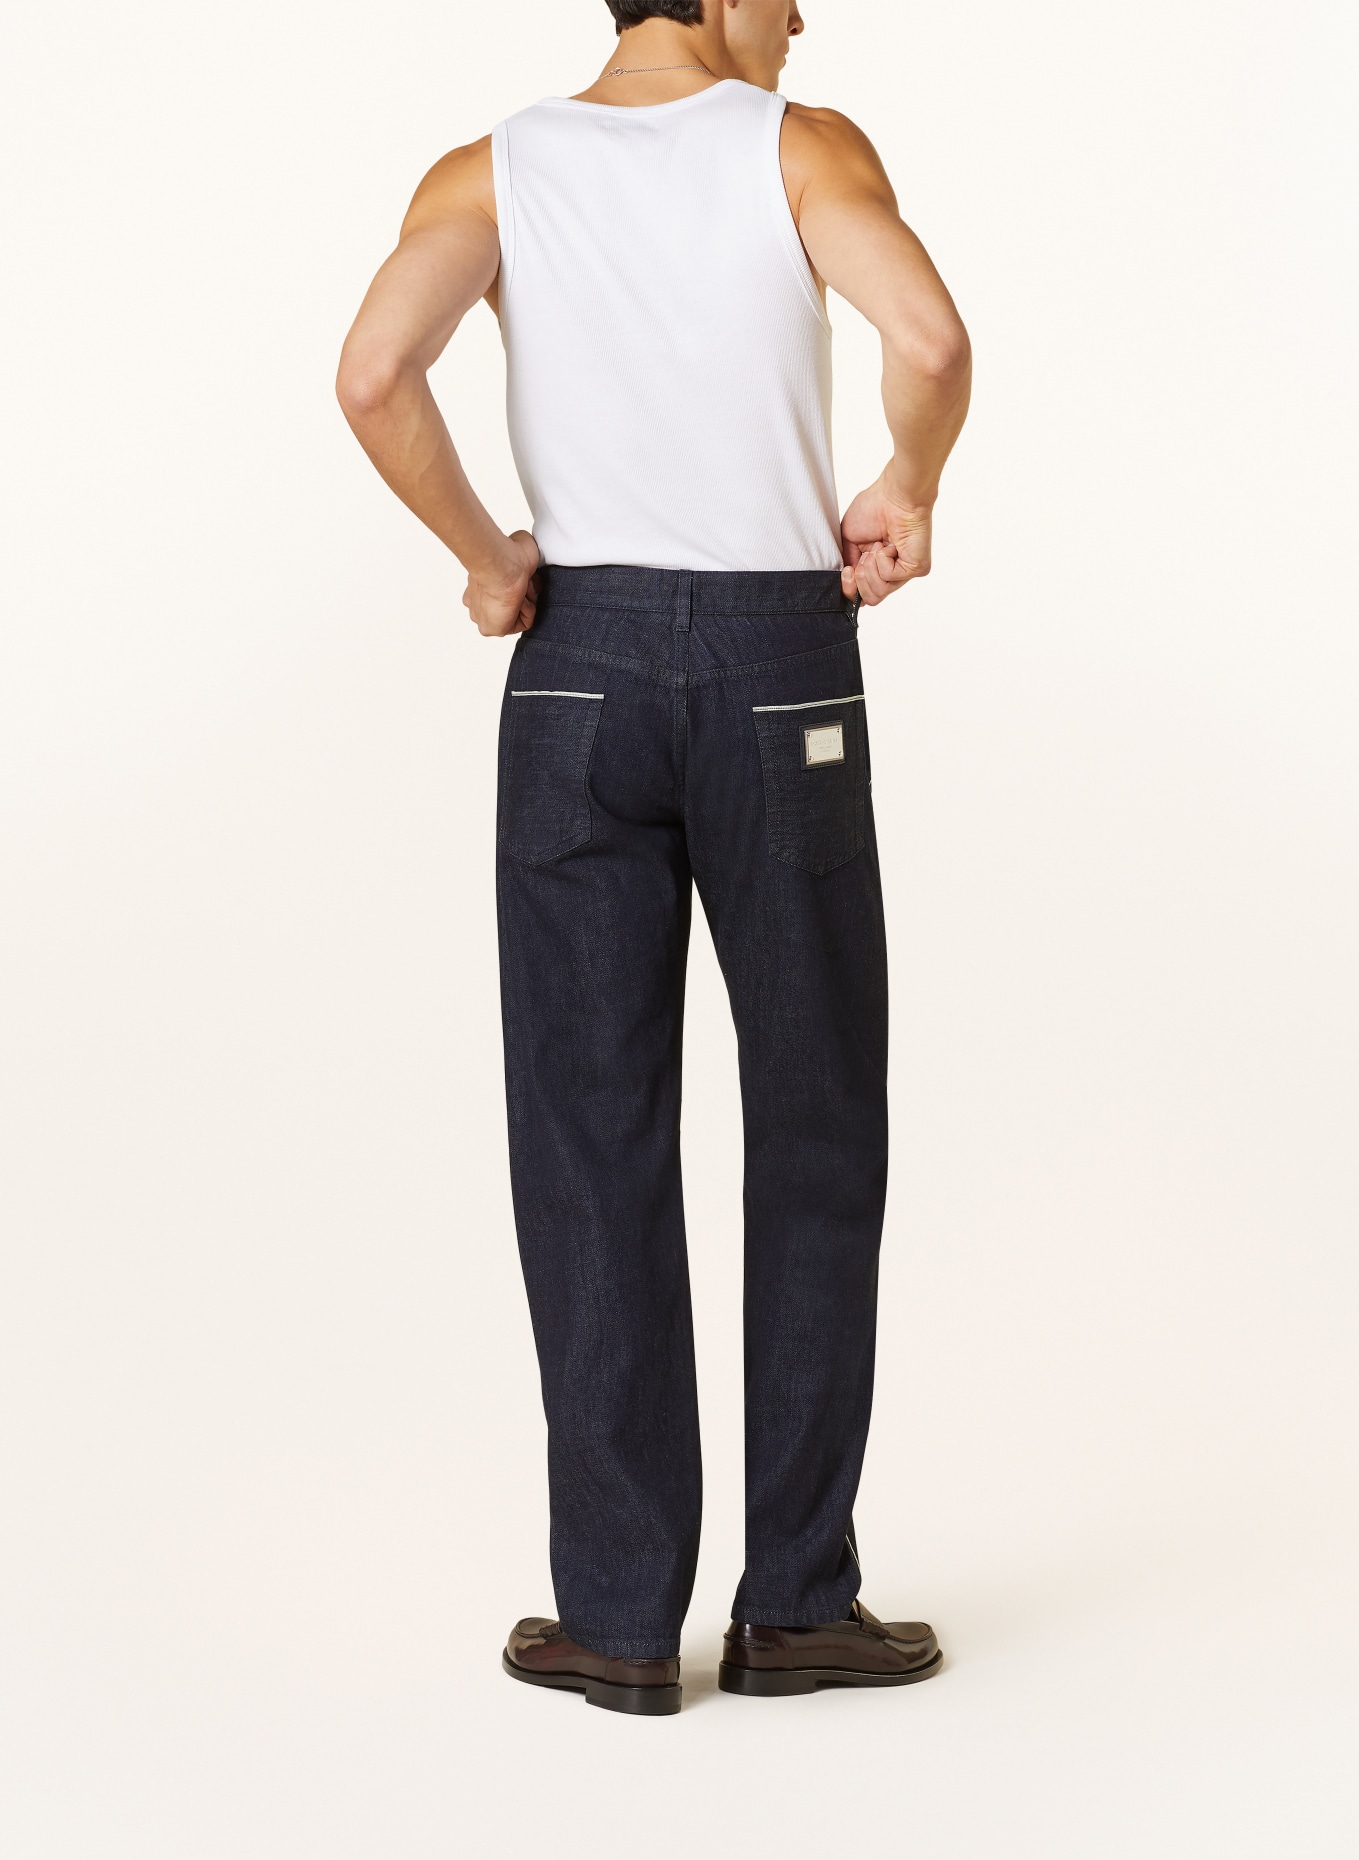 DOLCE & GABBANA Jeans regular fit, Color: S9001 VARIANTE ABBINATA (Image 3)